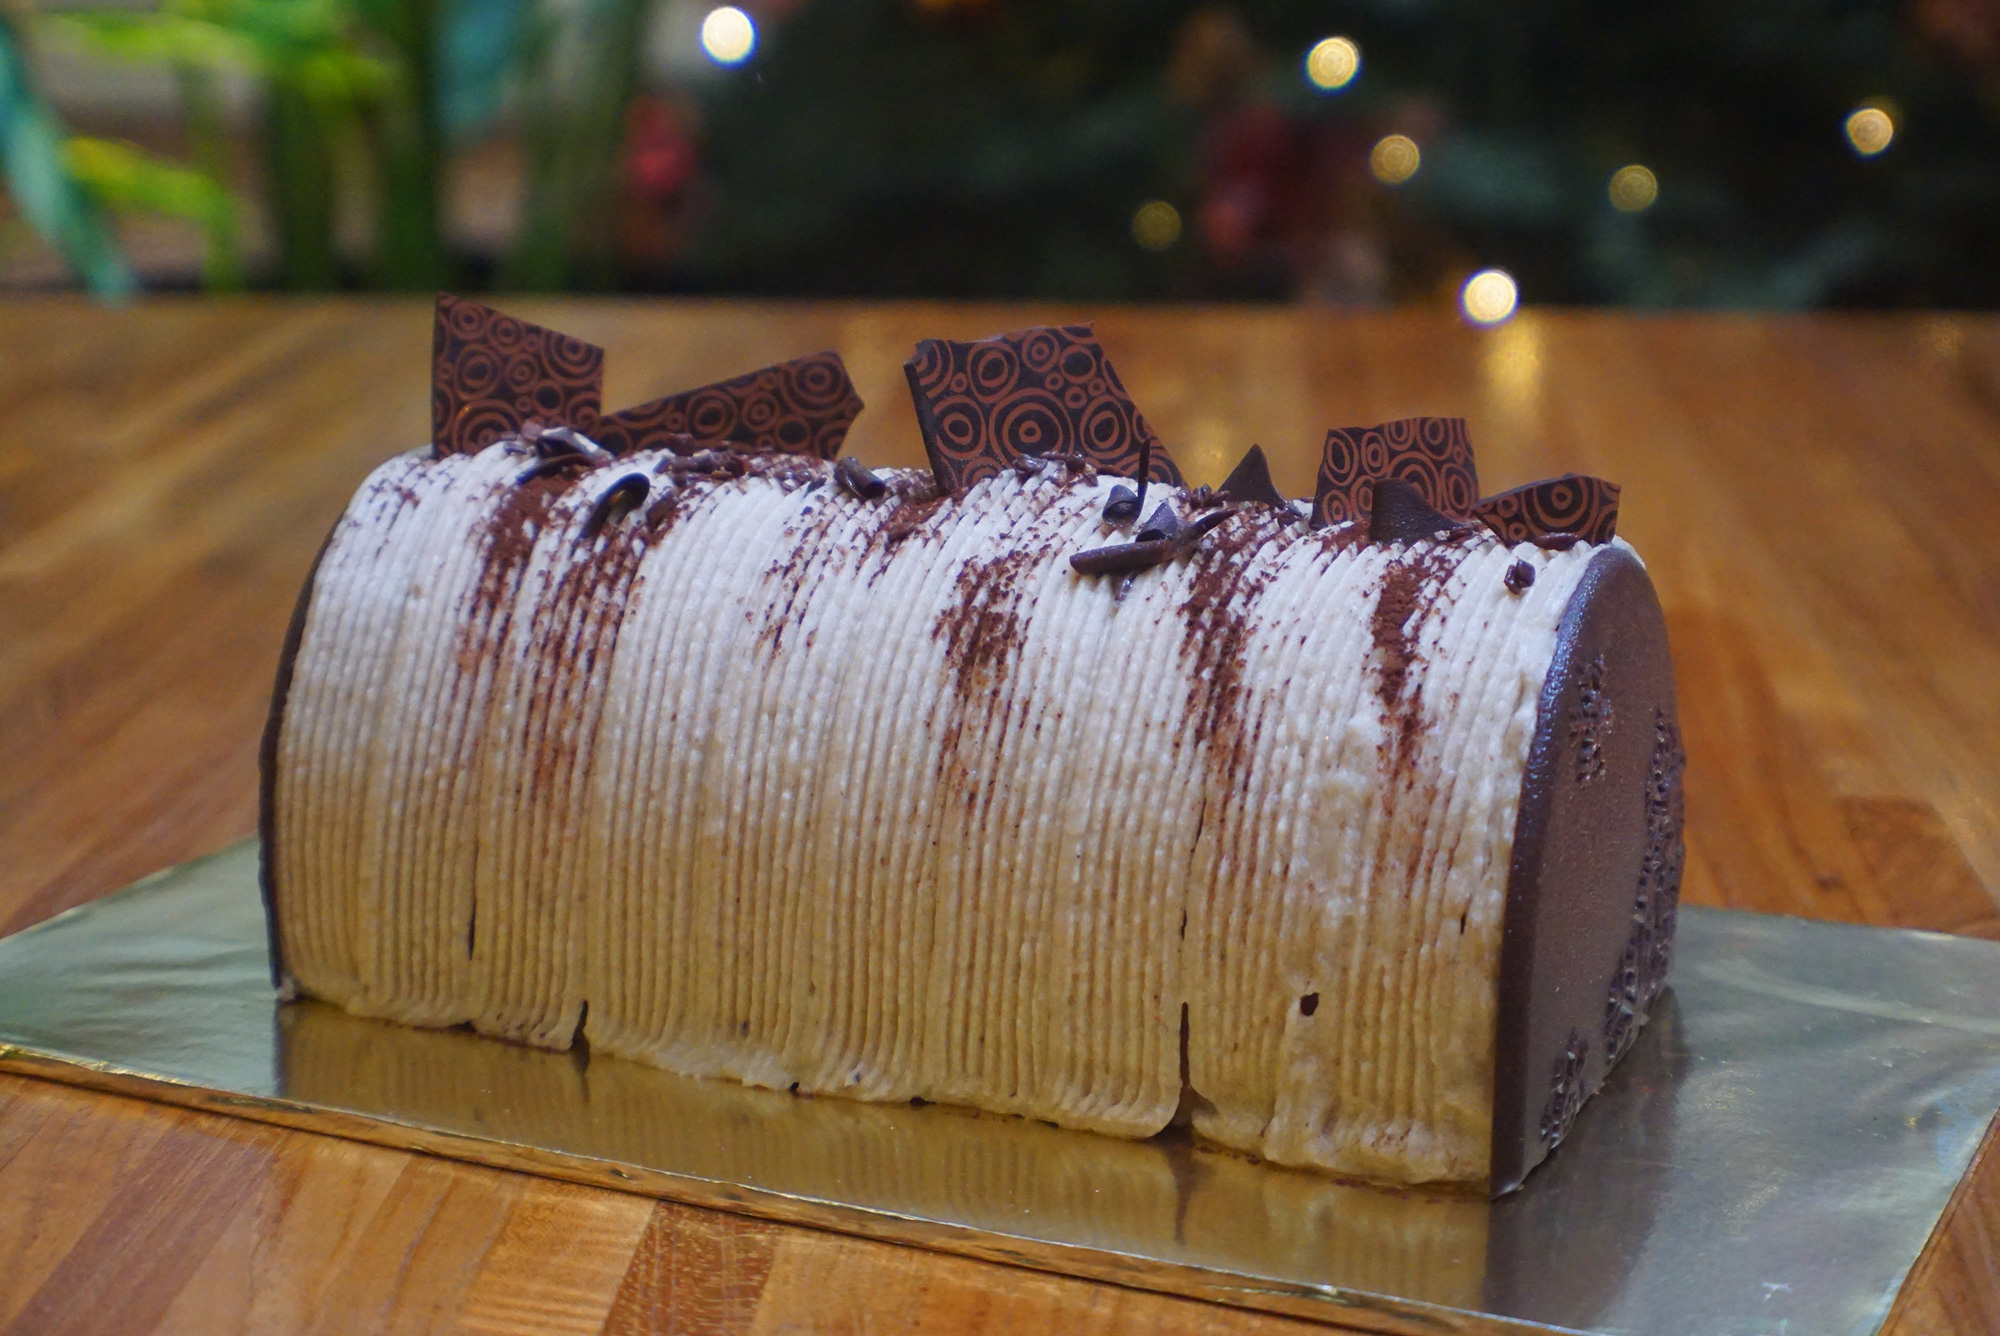 Mont Blanc Chocolate Chestnut Log Cake